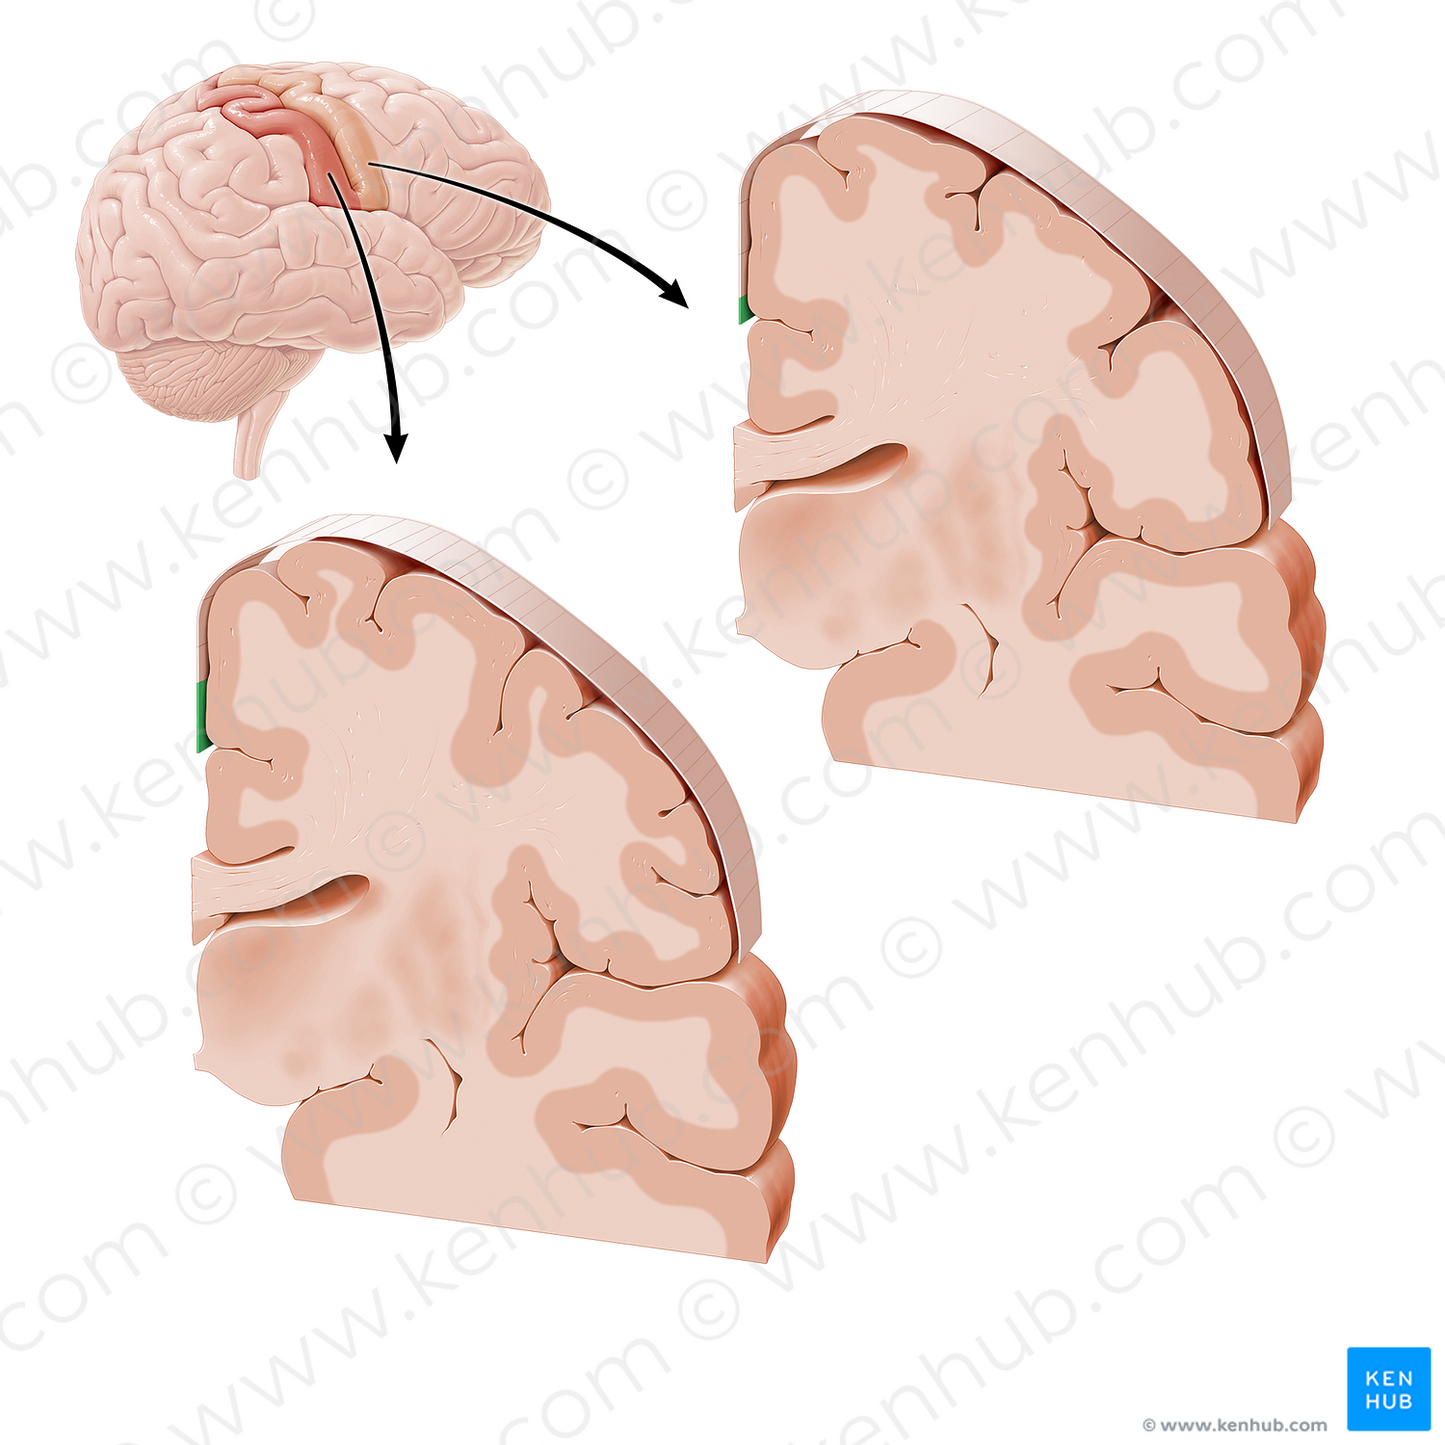 Sensory and motor cortex of genitals (#21218)